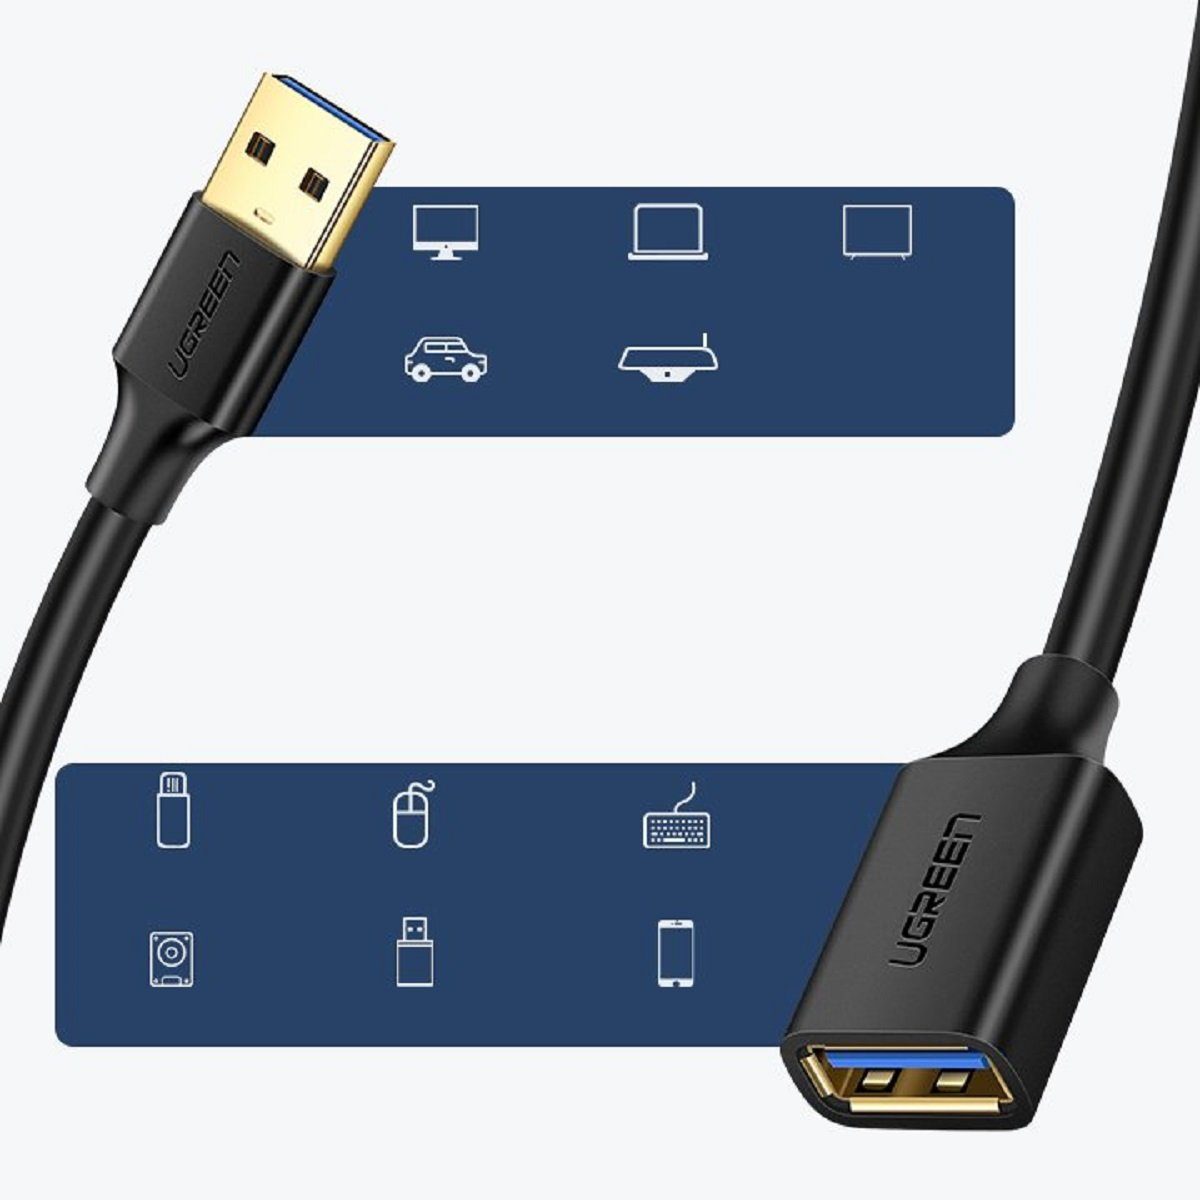 USB UGREEN 3.0 Schwarz Kabelverlängerungskabel Adapter Verlängerungskabel 1m